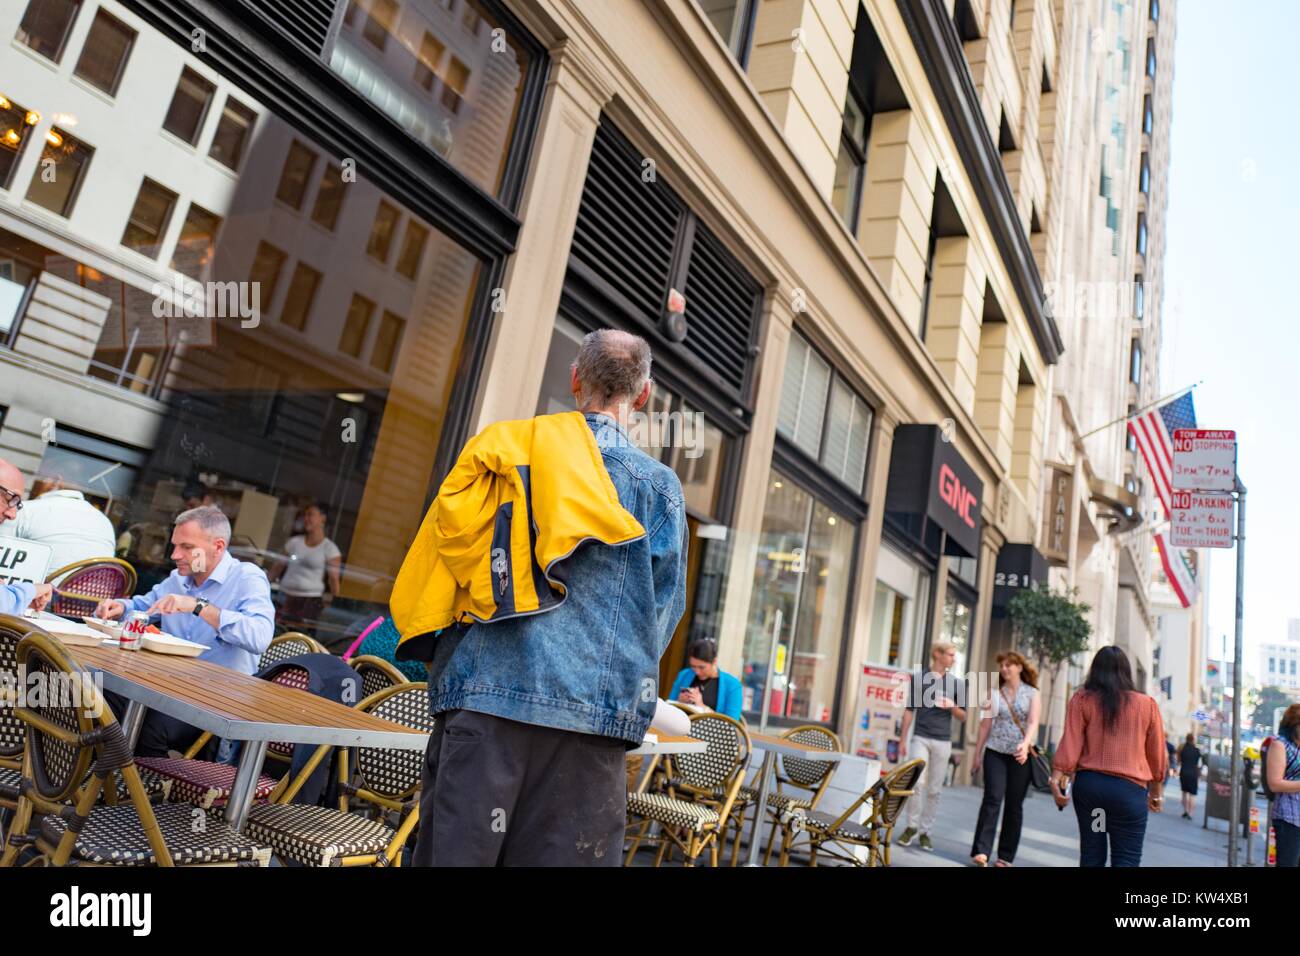 A homeless man wearing a denim jacket approaches a well-dress man in a button down shirt as he eats lunch at a restaurant in the Financial District neighborhood of San Francisco, California, September 26, 2016. Stock Photo